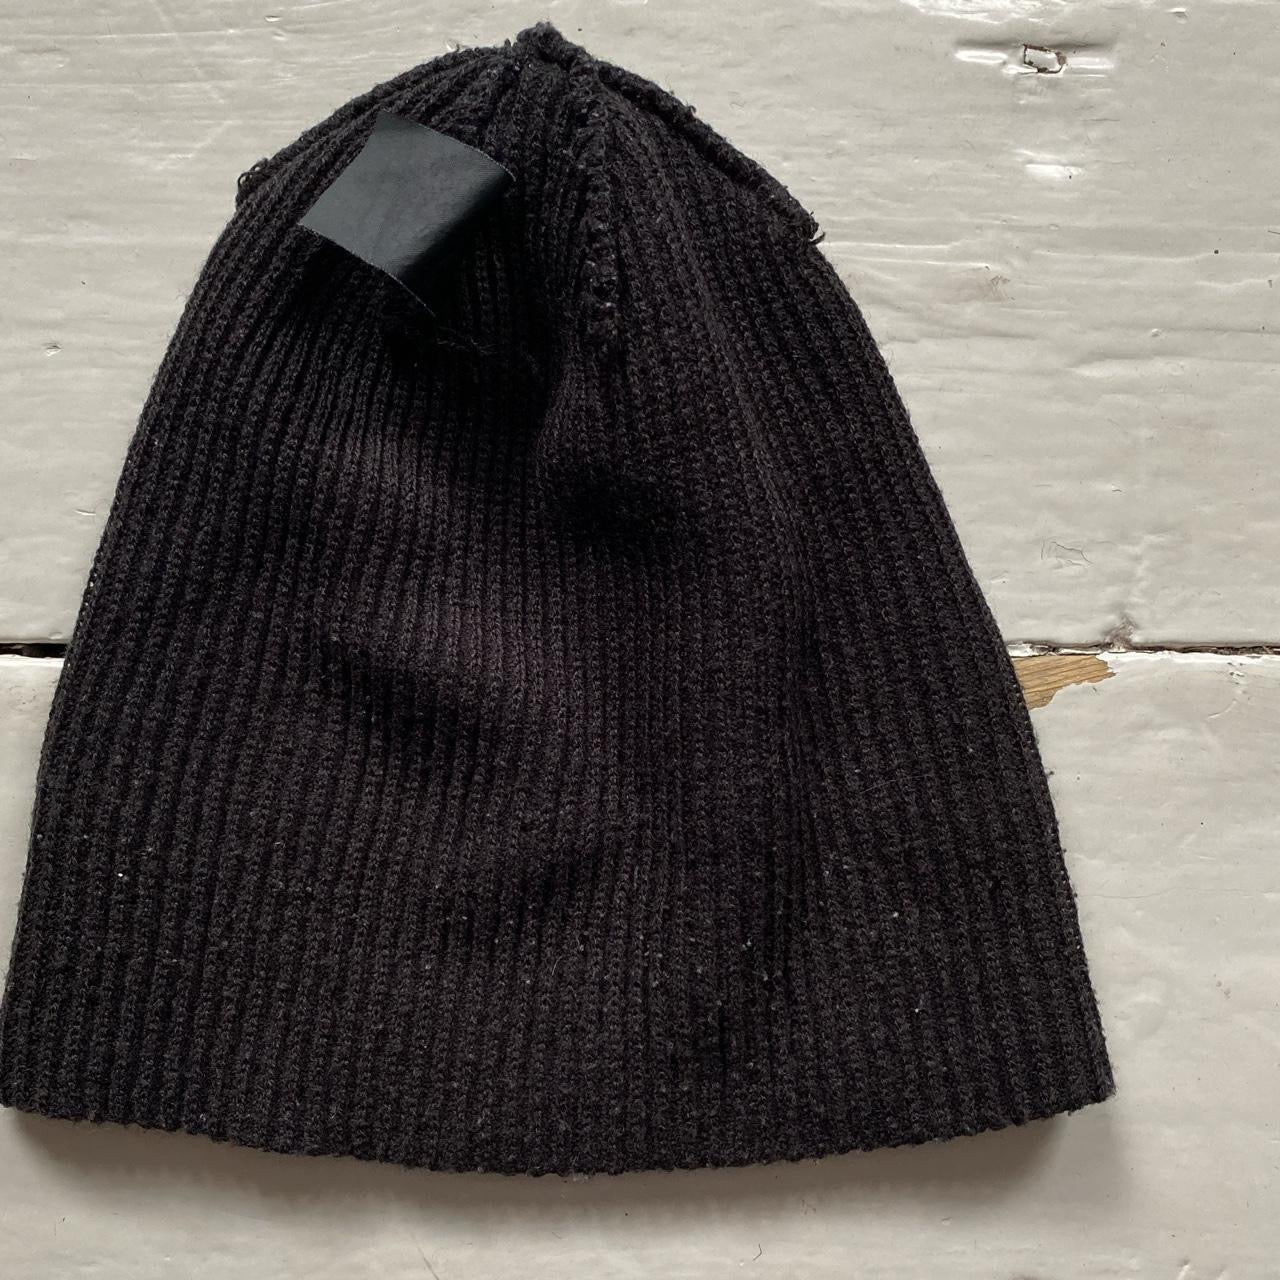 Stussy Black Beanie Hat